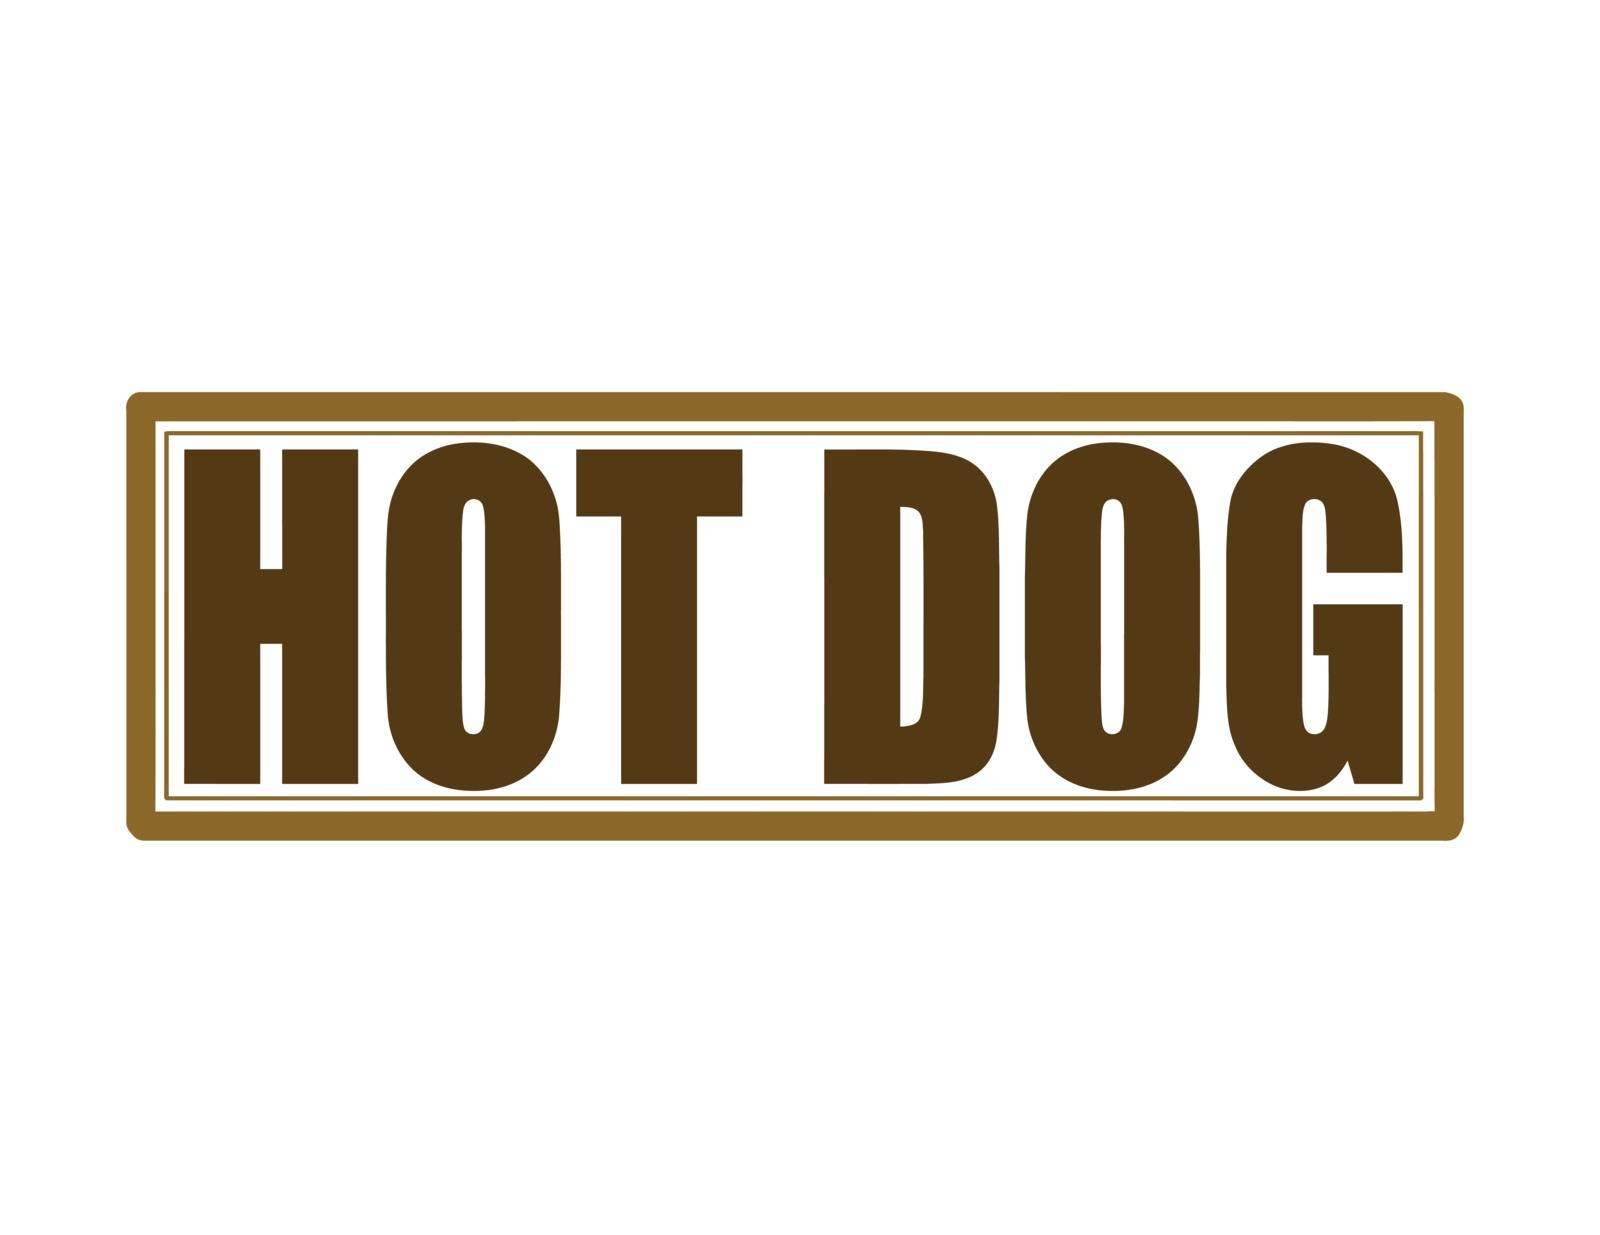 Hot dog by carmenbobo